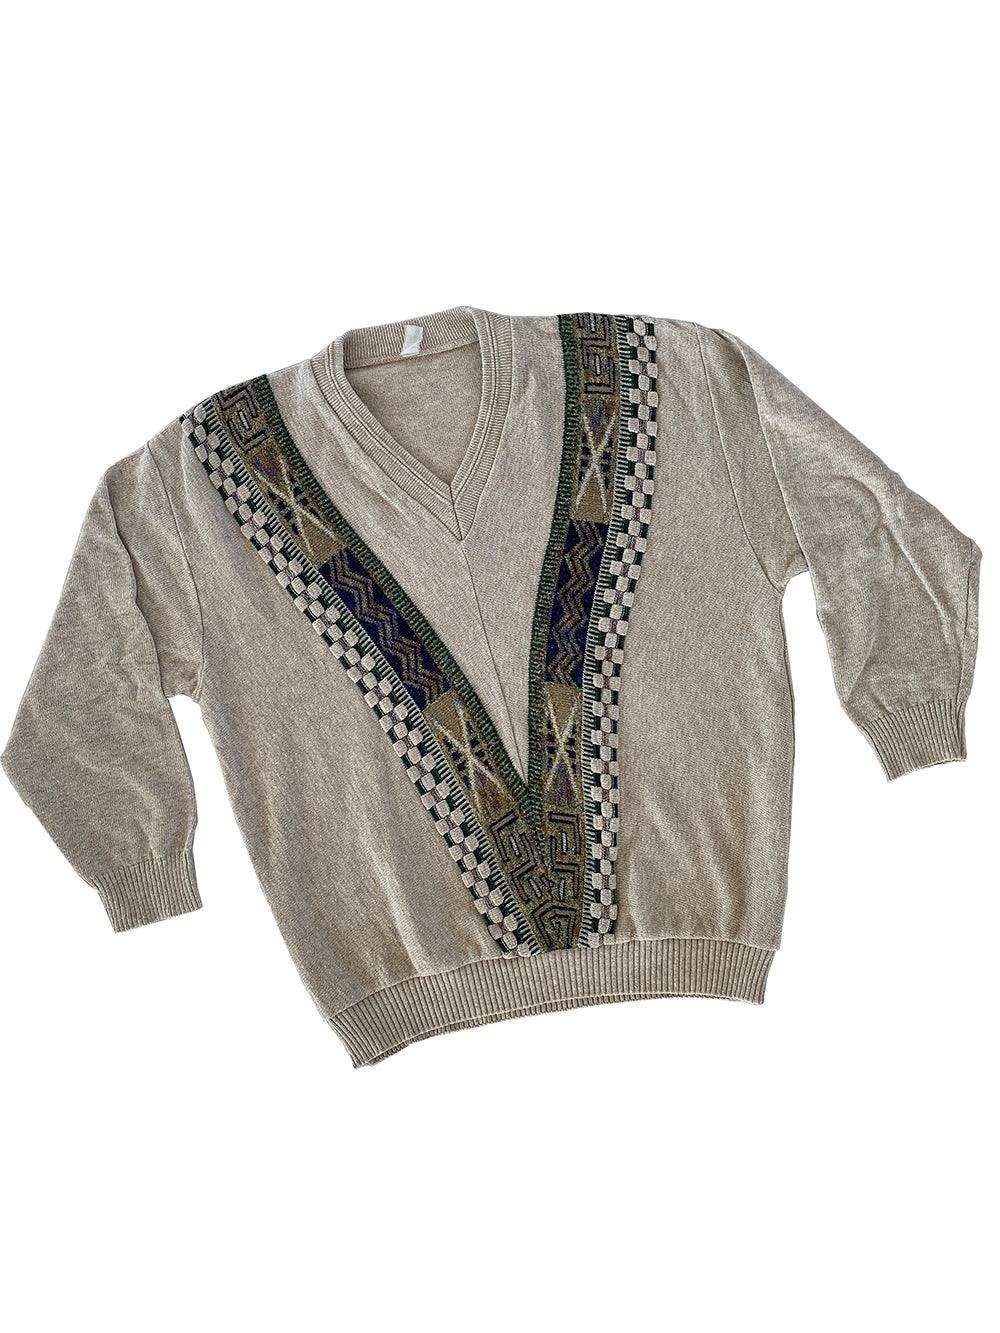 Vintage Unisex Knitted Sweater - Balagan Vintage Sweater 80s, 90s, knitted sweater, NEW IN, sweater